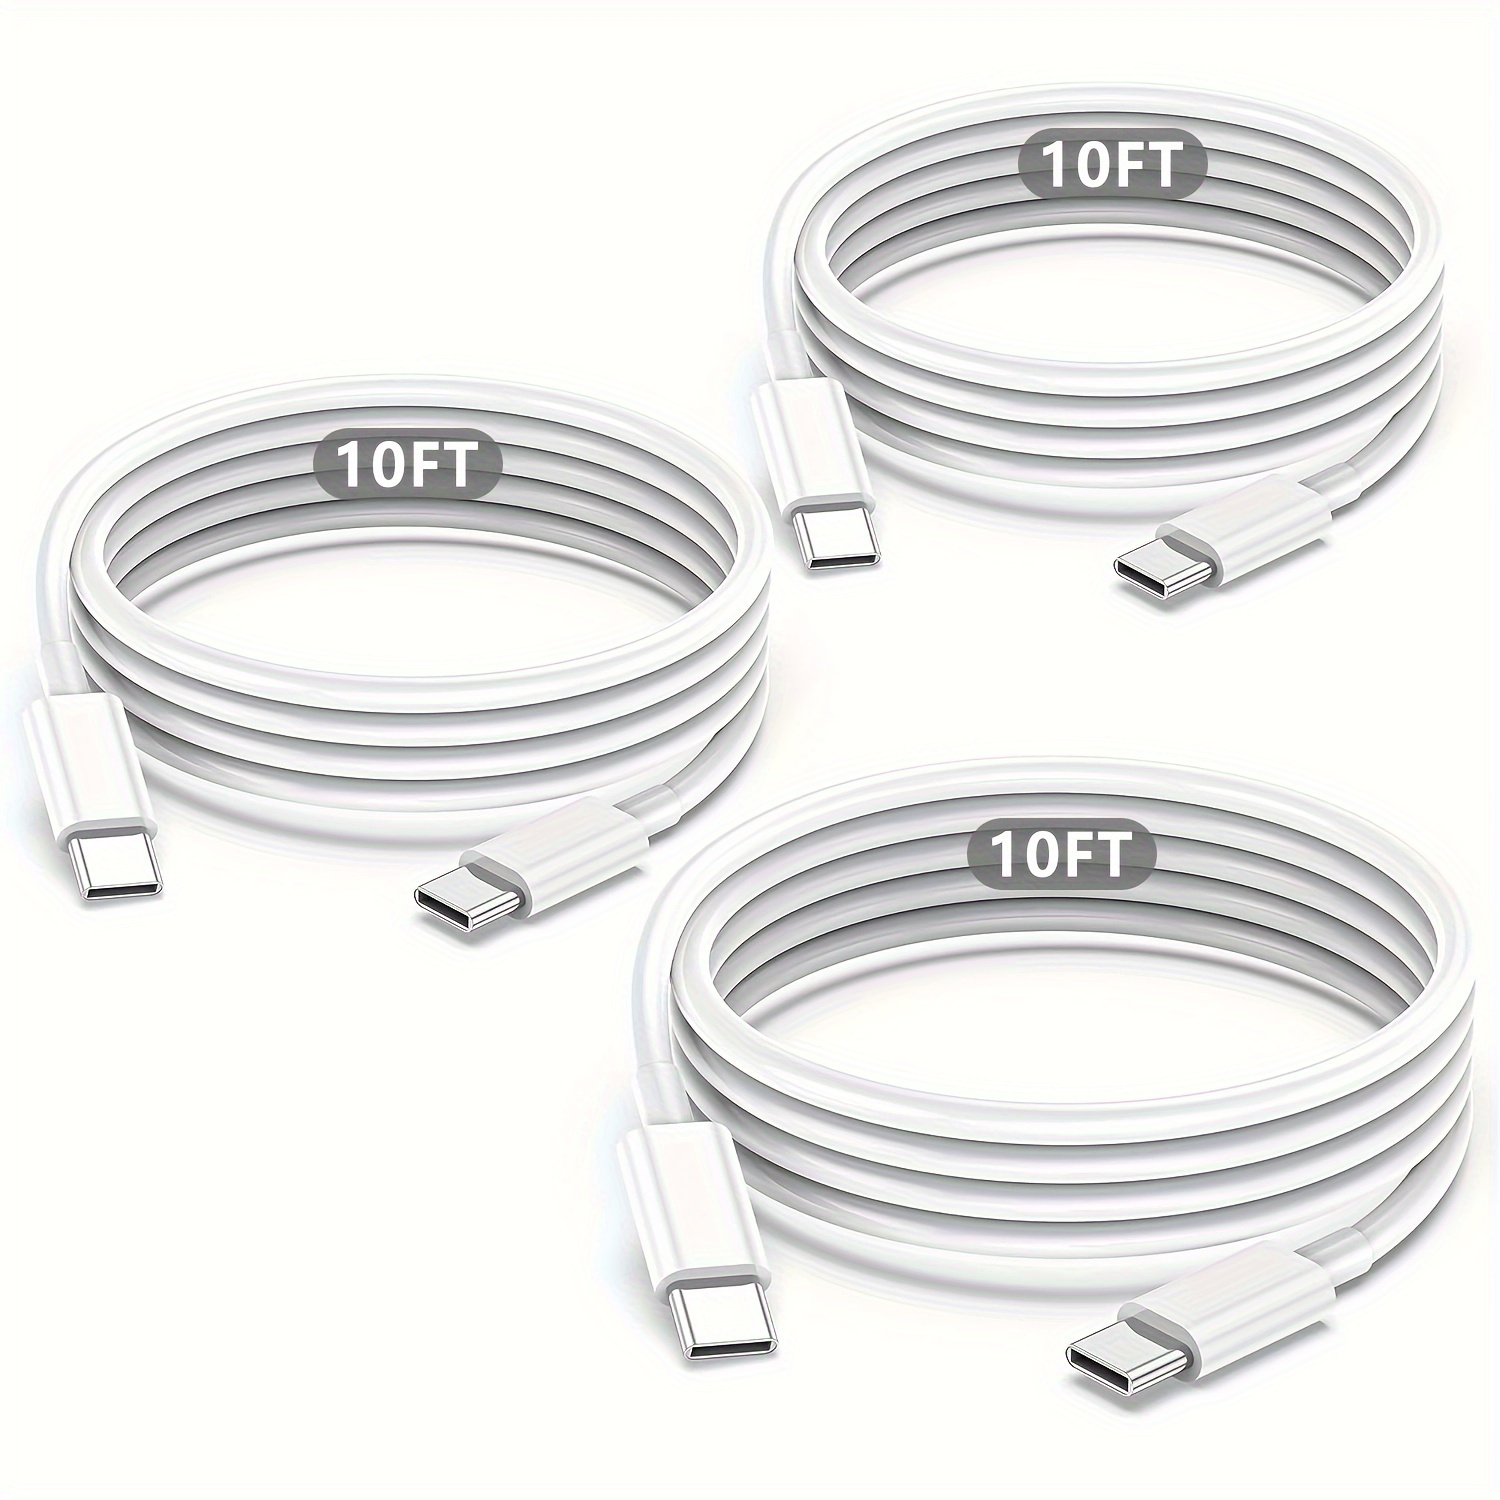 Câble USB-C vers USB-C Charge Rapide 60W pour iPhone 15, iPhone 15